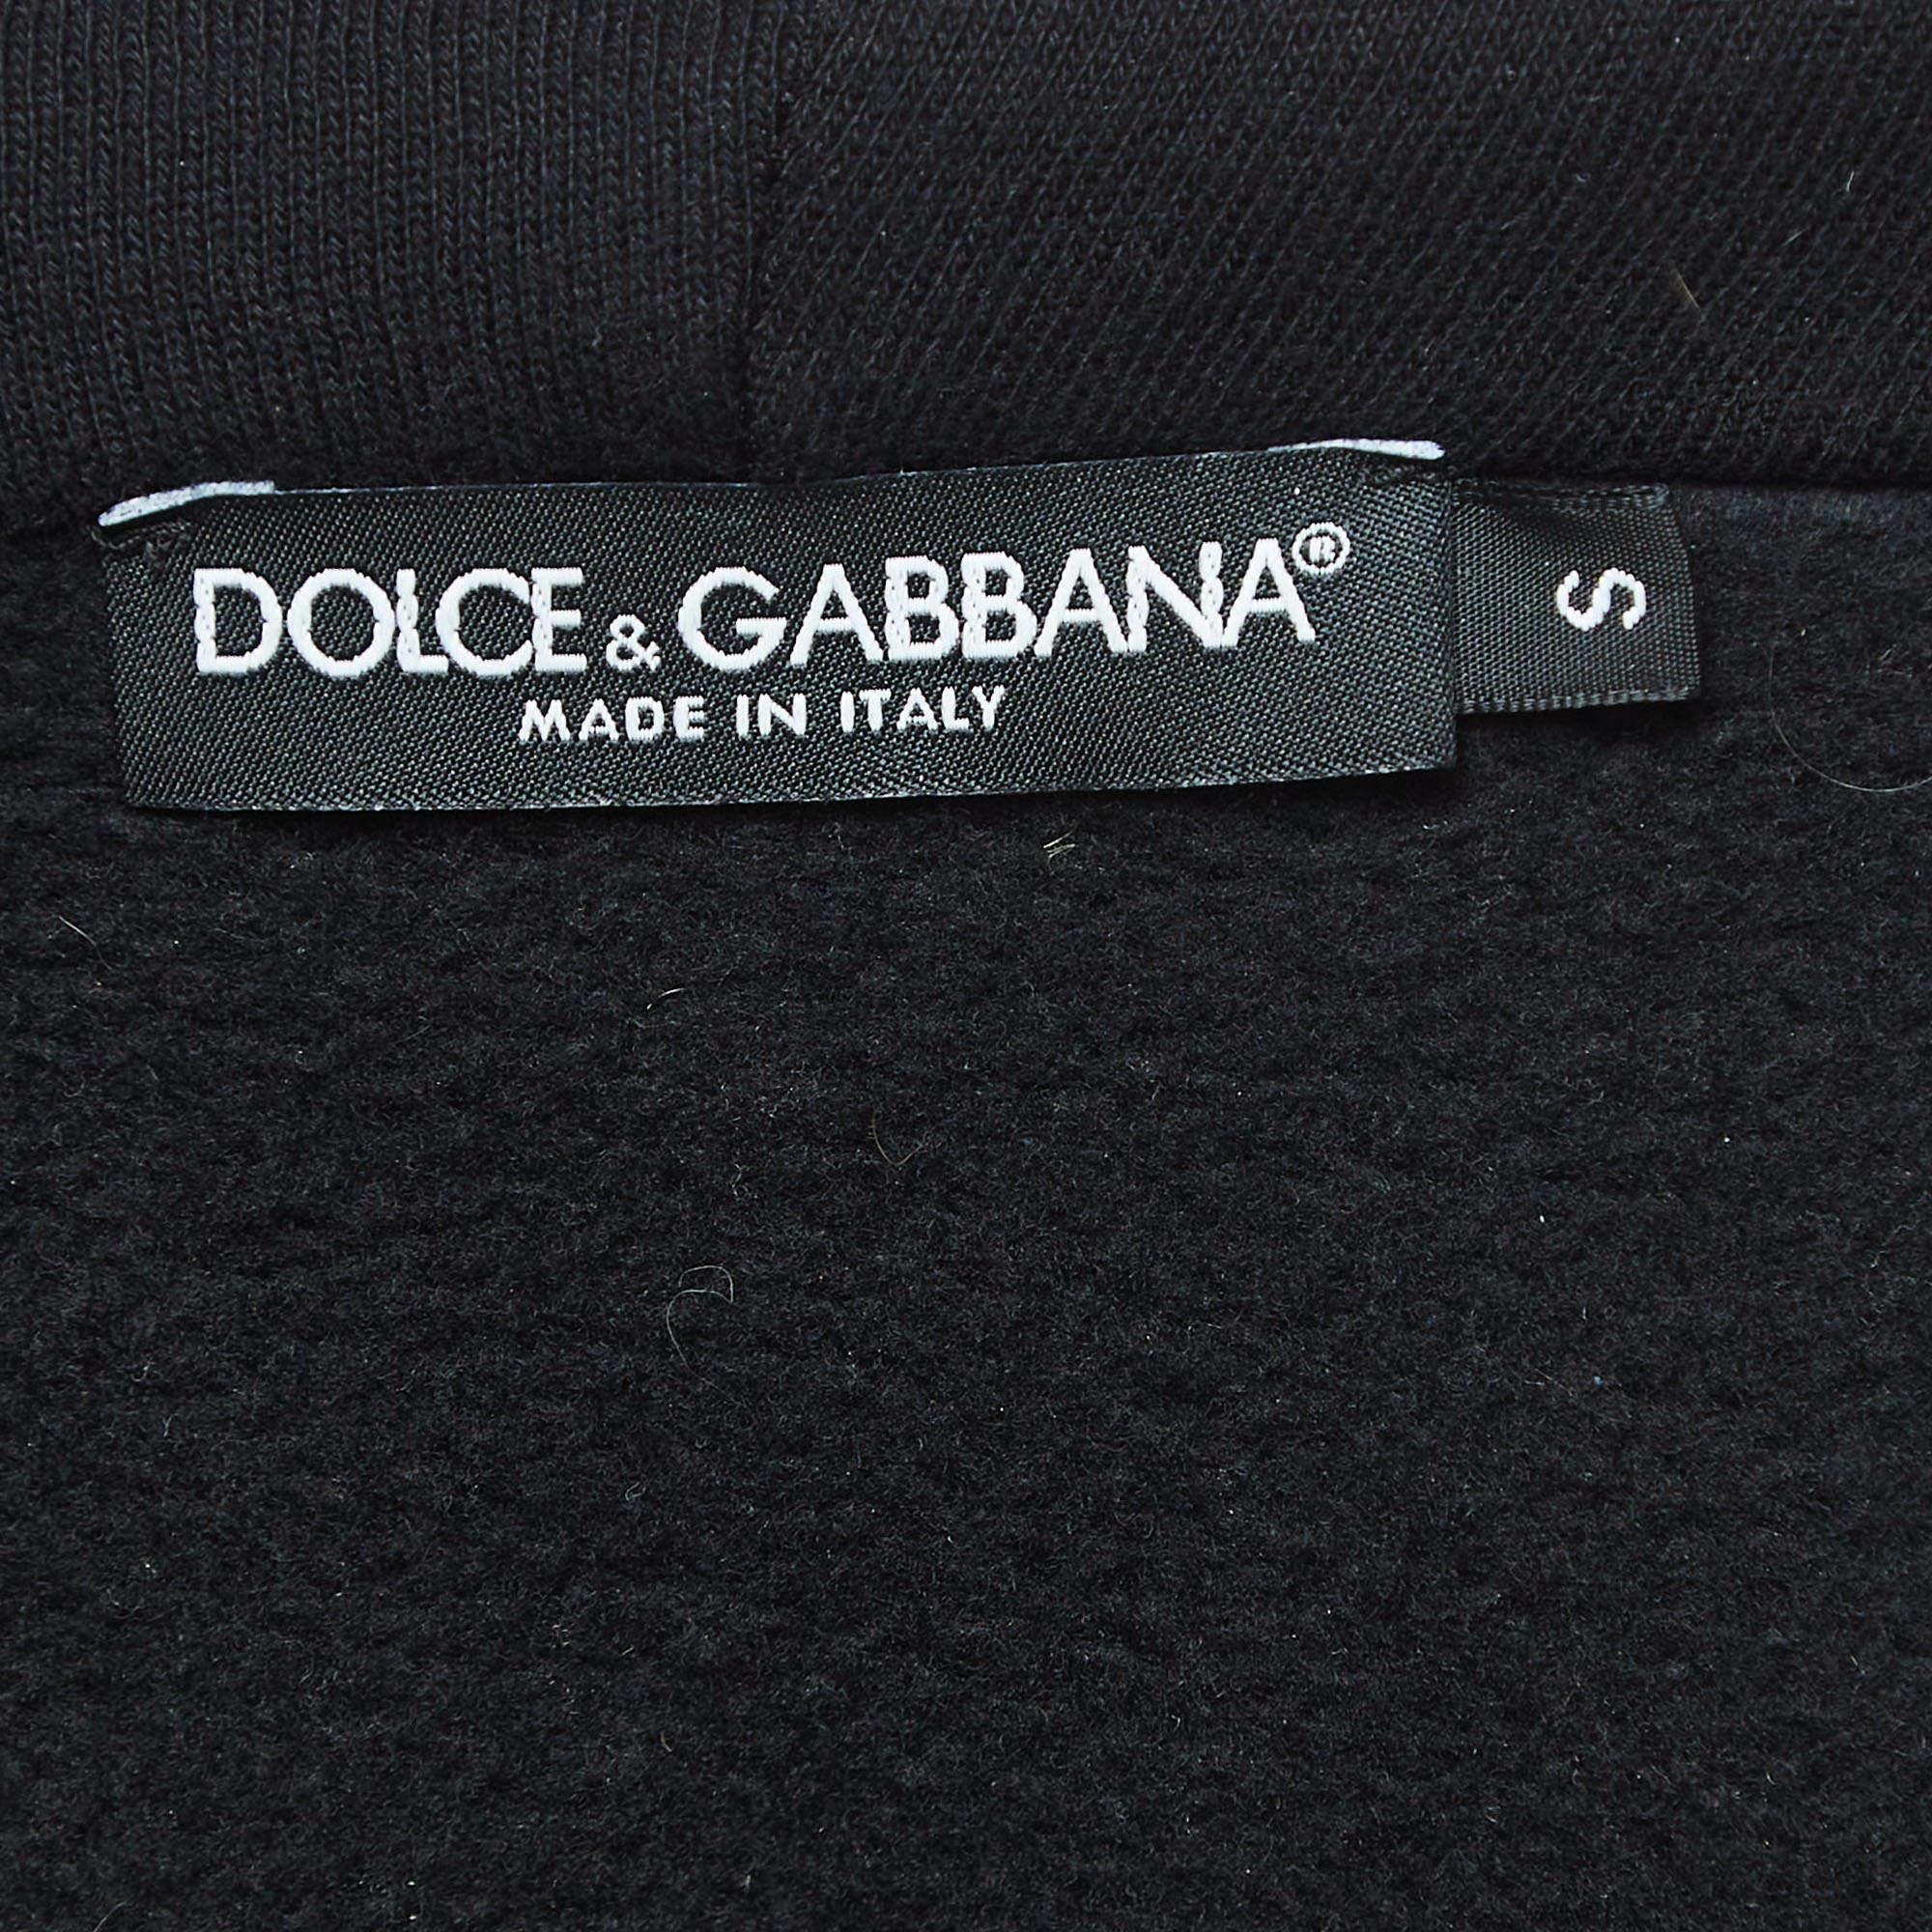 Dolce & Gabbana Black Graphic Print Cotton Blend Hoodie S In Good Condition For Sale In Dubai, Al Qouz 2